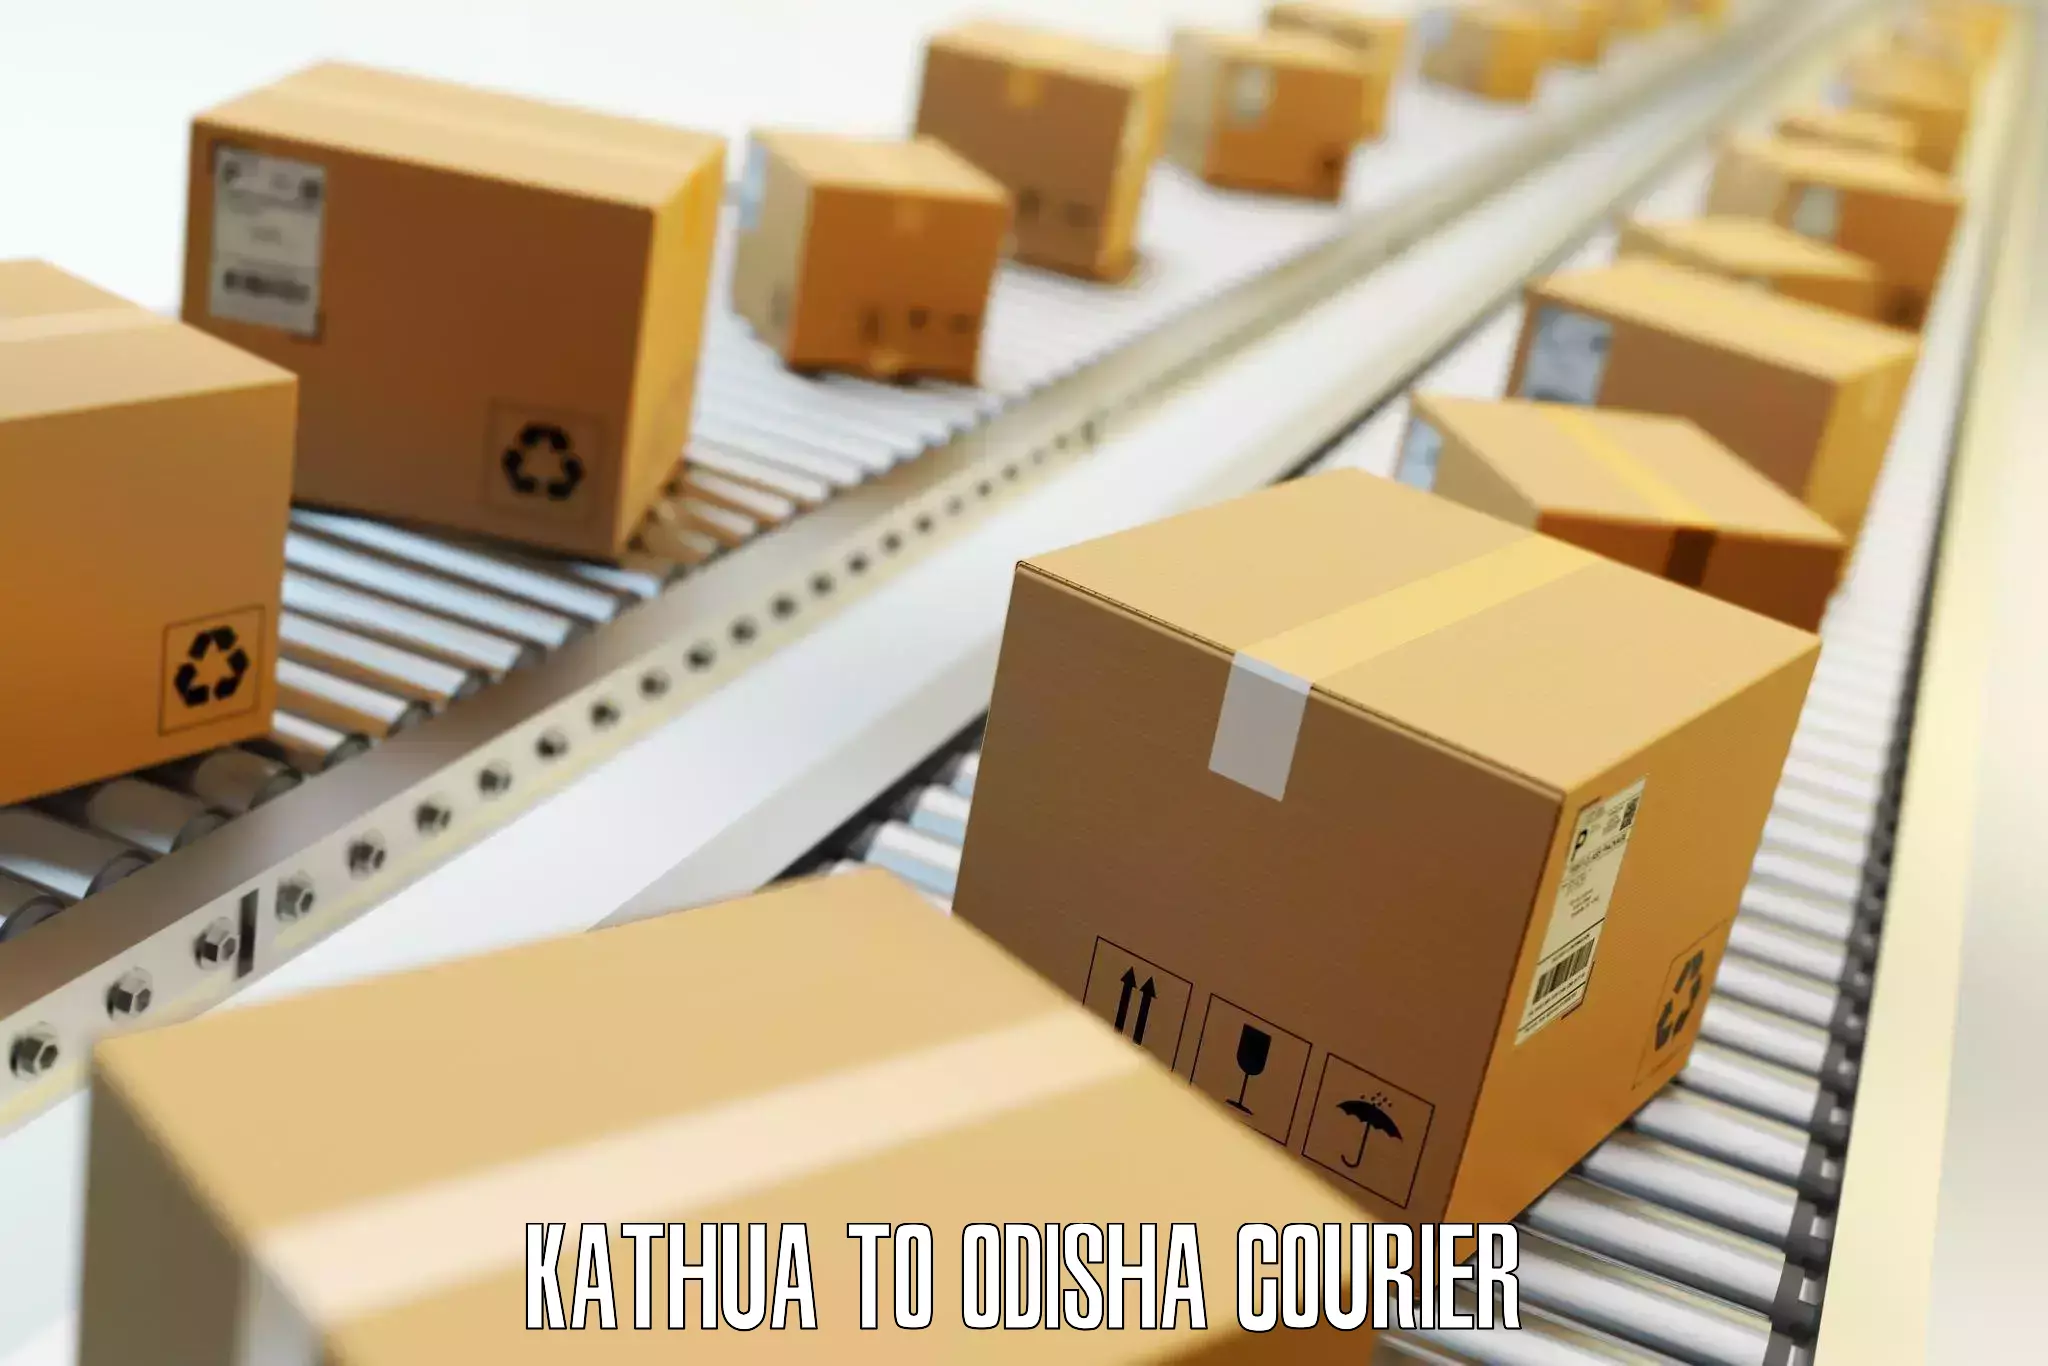 Baggage delivery technology Kathua to Odisha